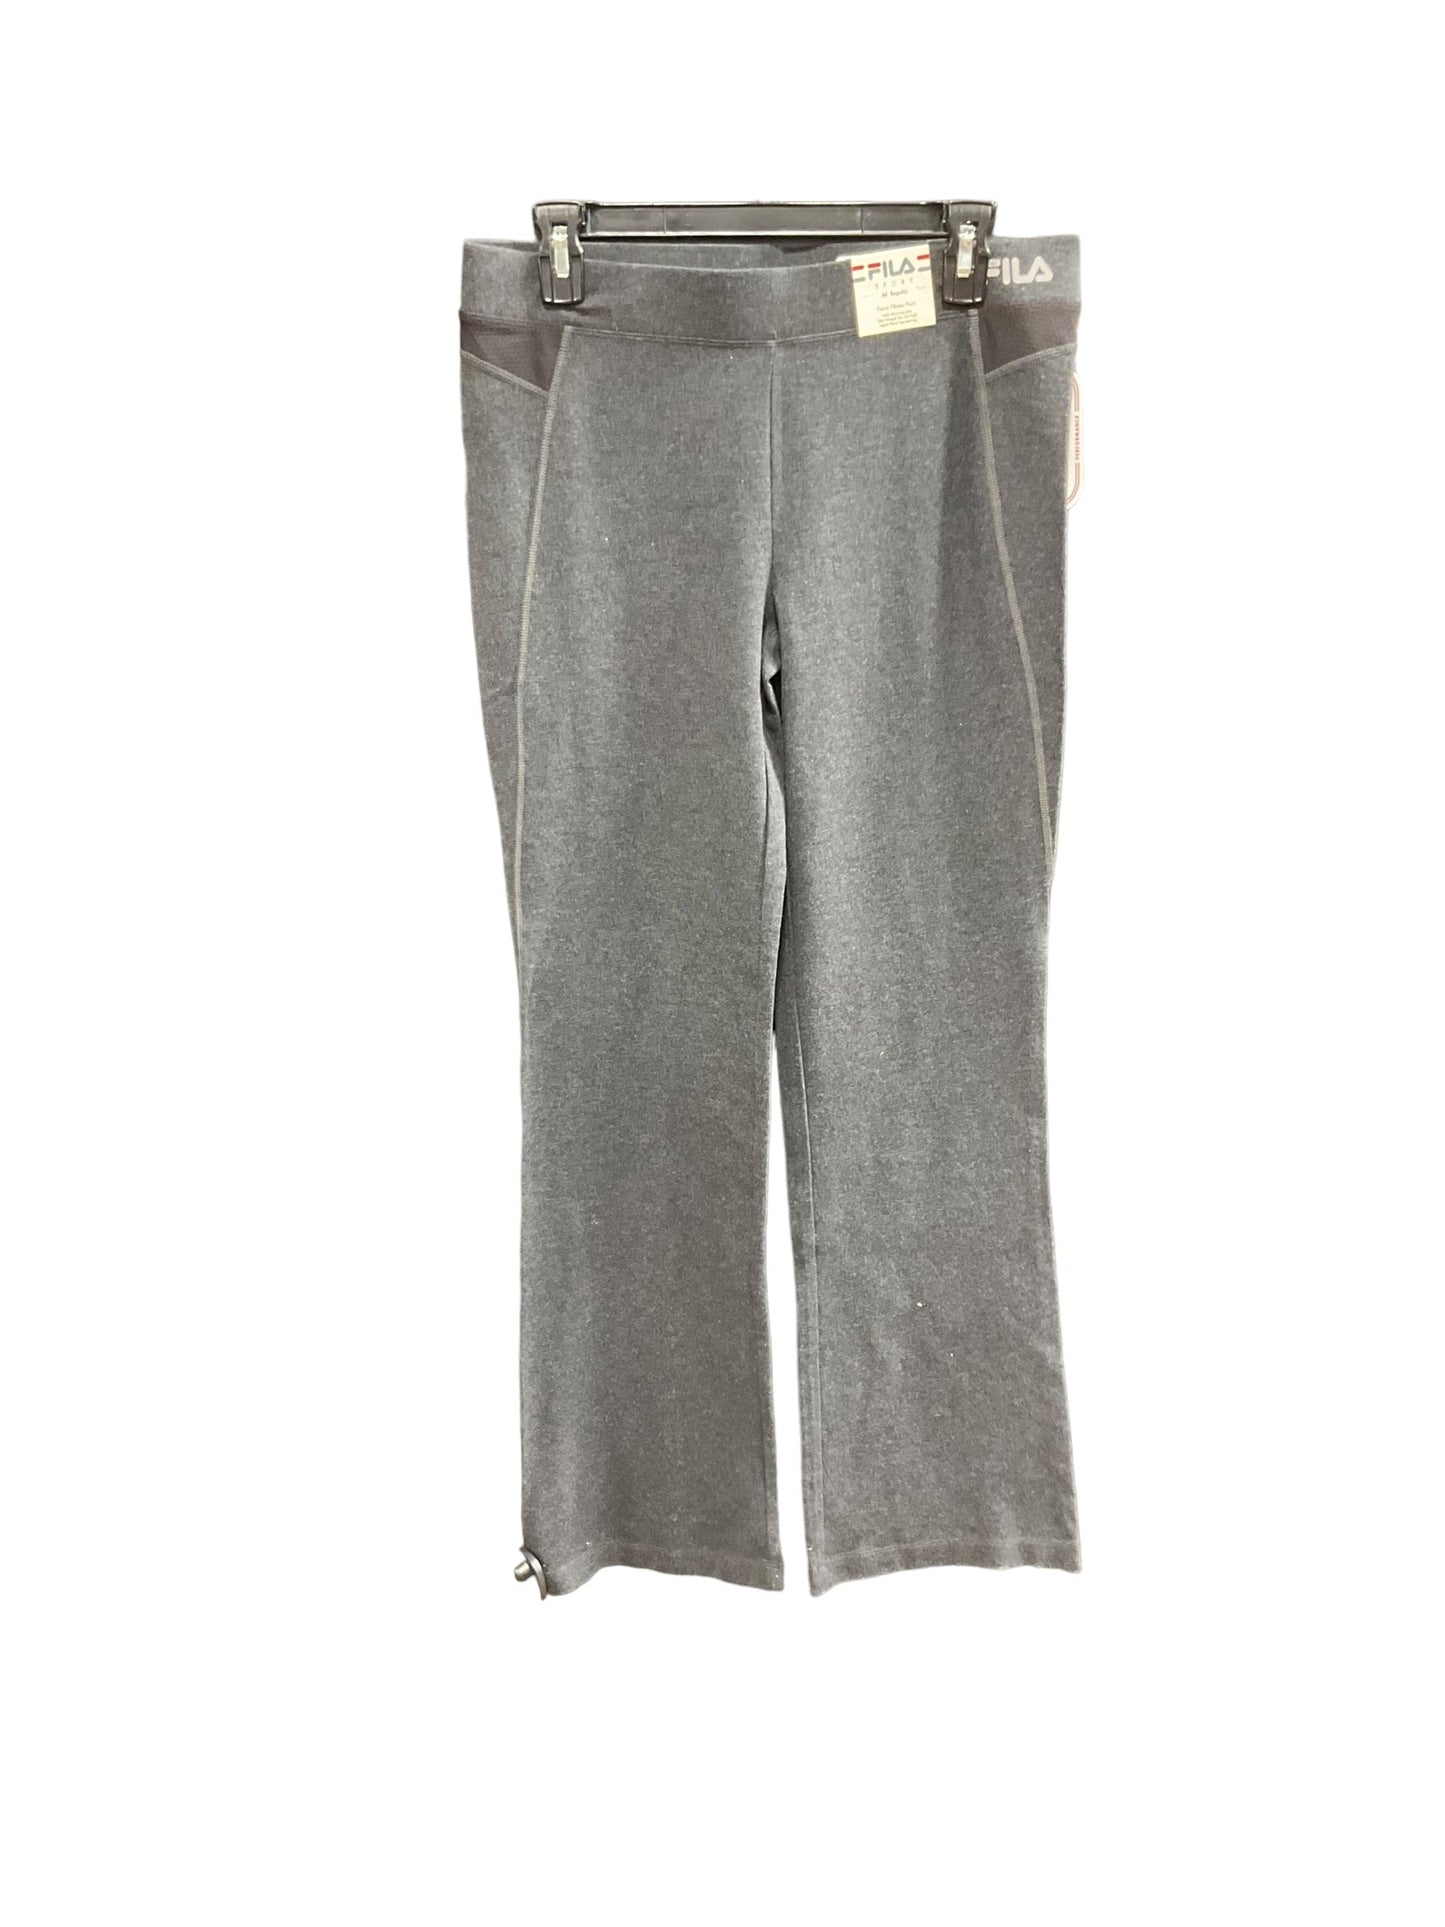 Grey Athletic Pants Fila, Size M